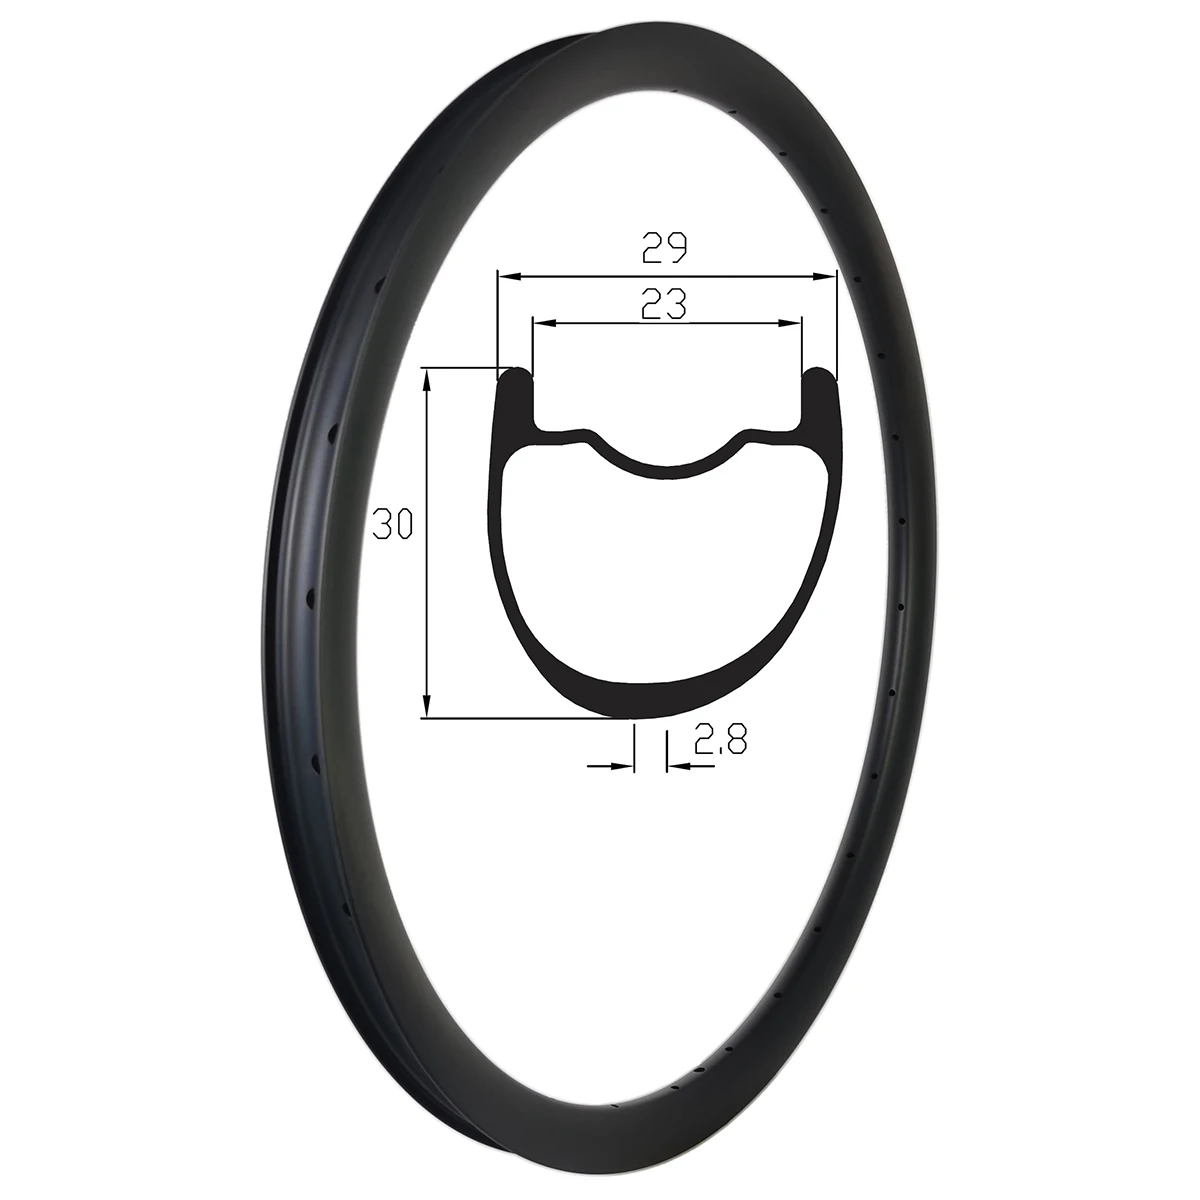 Hookless Asymmetry 700C Gravel Bike 30mm x 29mm 3K UD Carbon Fibre Bicycle Wheels 23mm Inner Width Clincher Tubeless Rims Disc